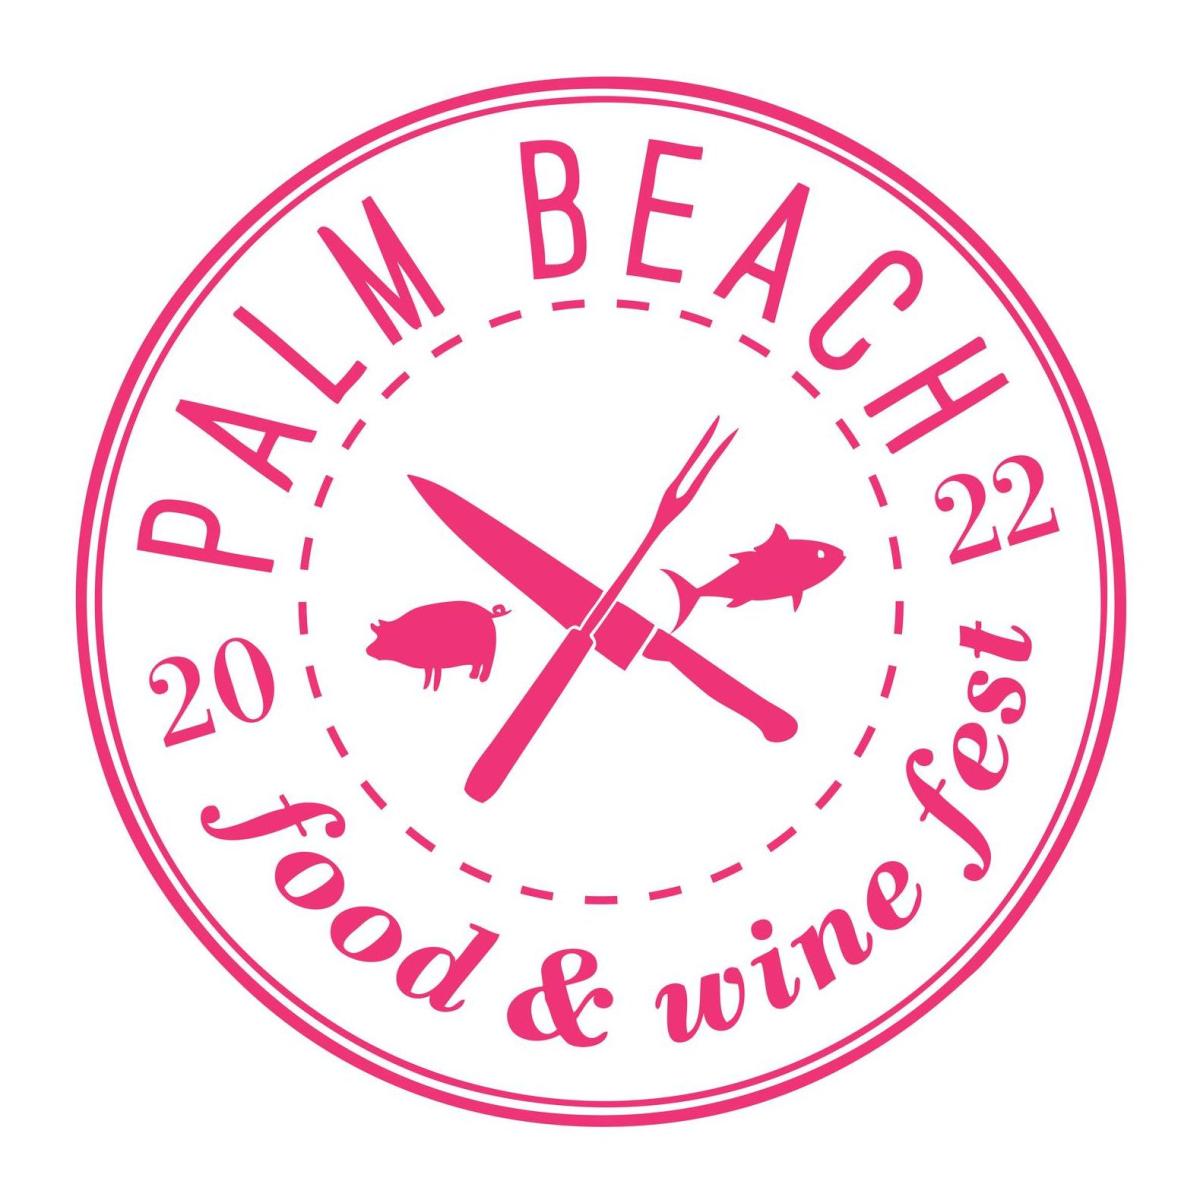 Palm Beach Food & Wine Festival logo 2022